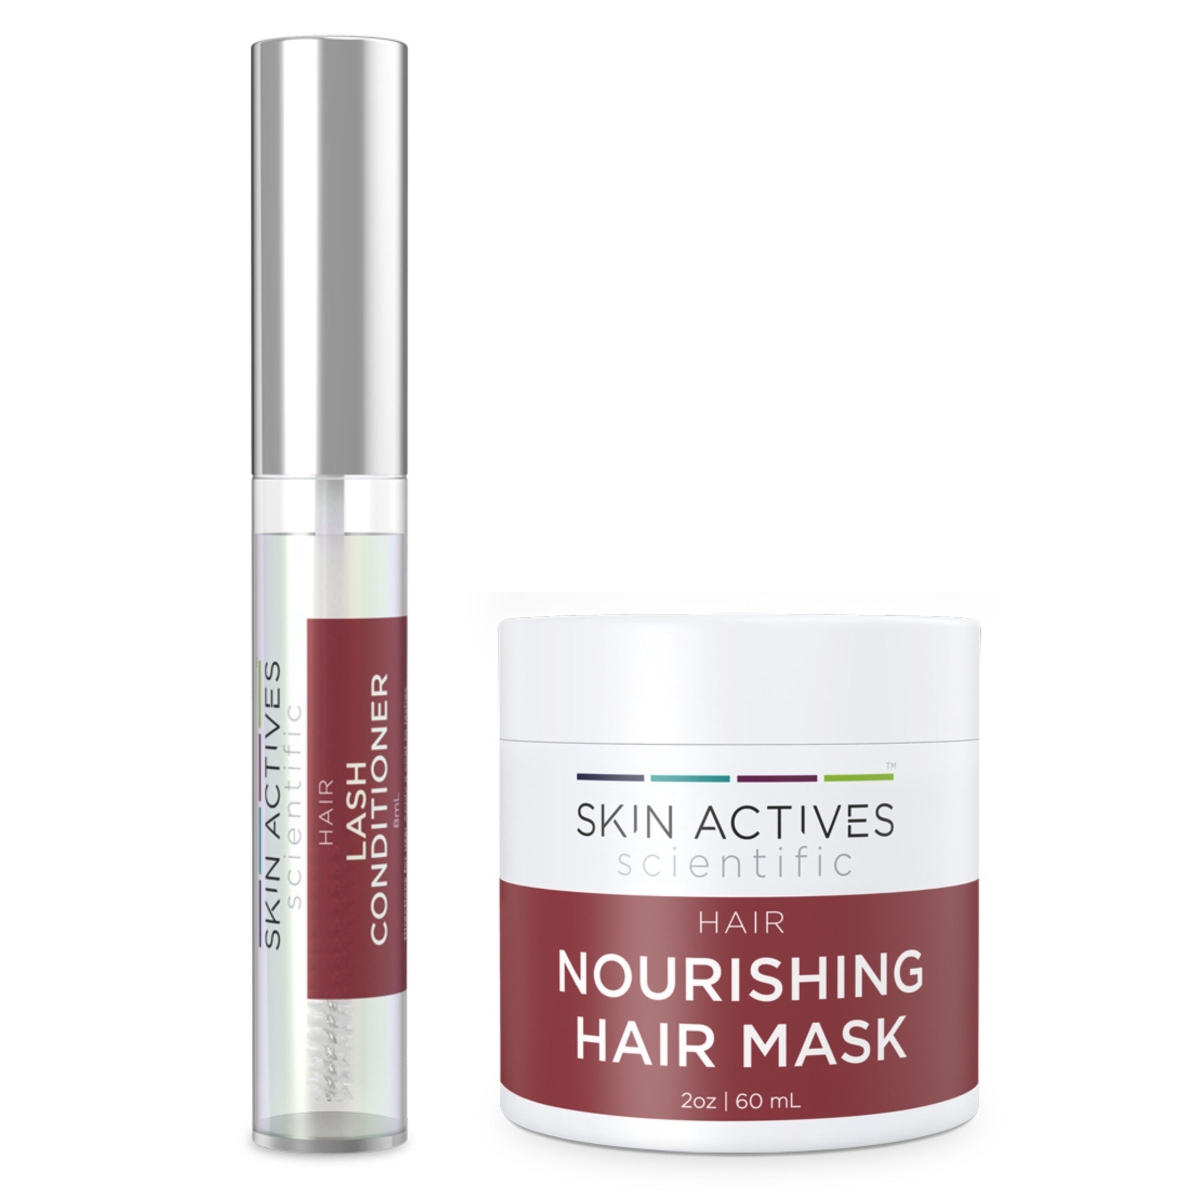 Skin Actives Scientific SAS-HAIR-SET-2